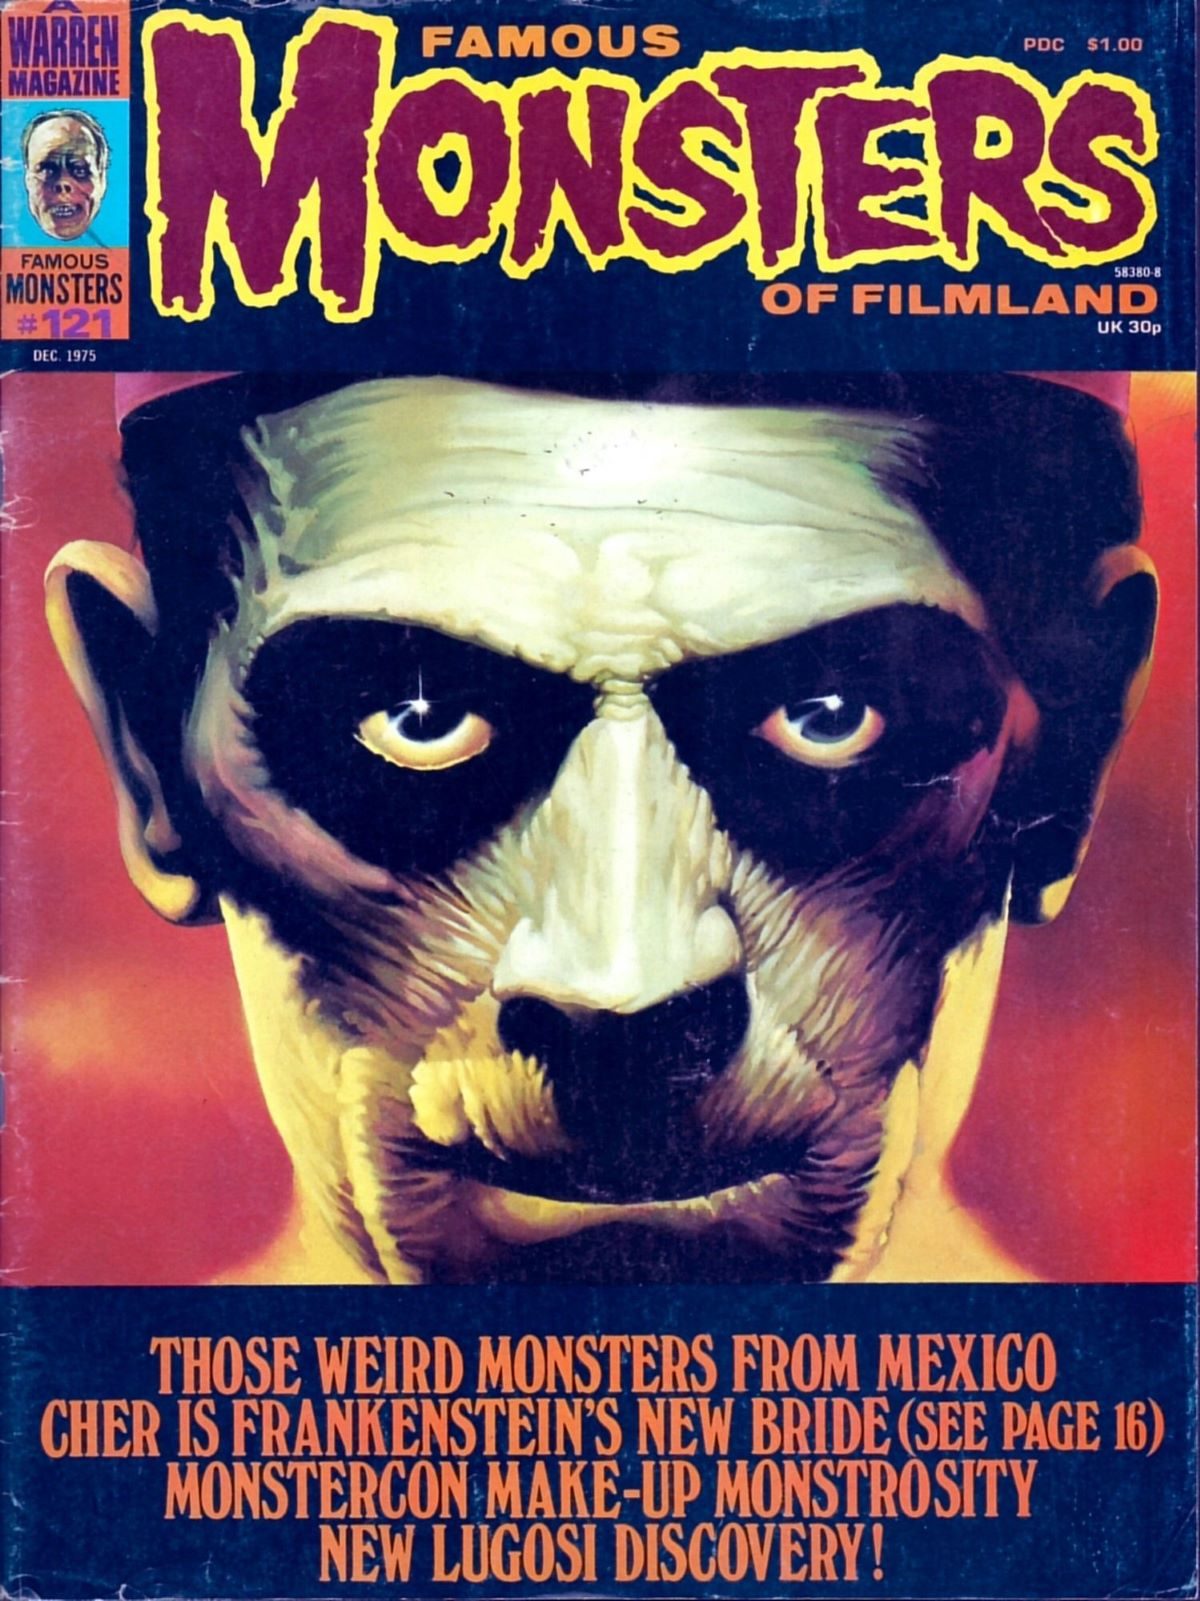 Famous Monsters of Filmland, magazine, horror films, Boris Karloff, The Mummy